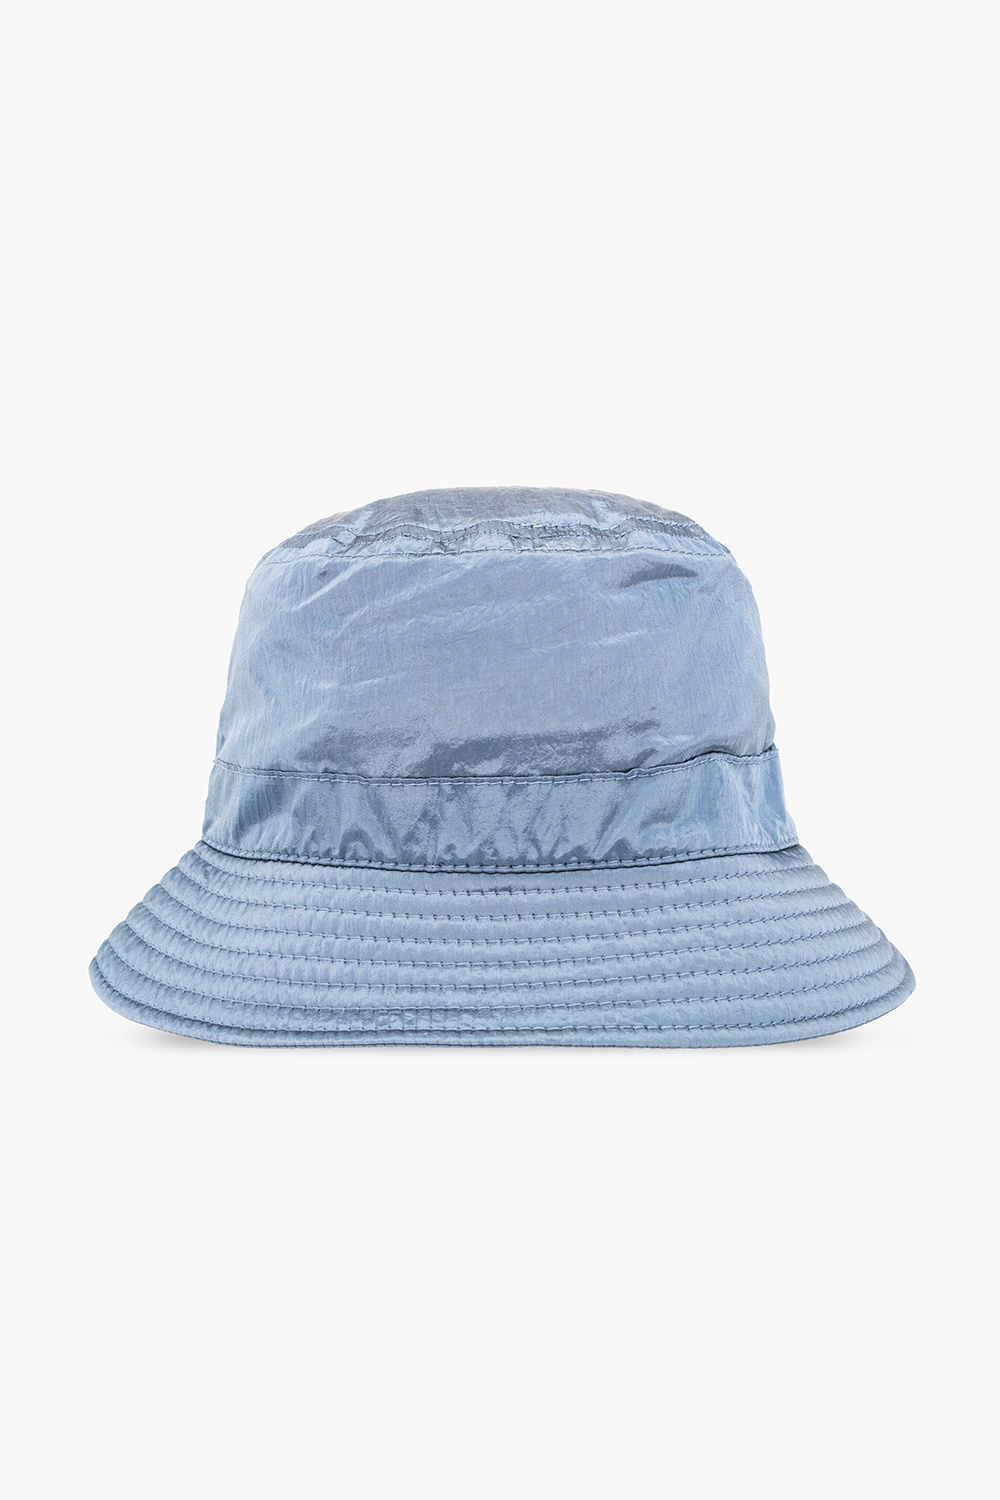 Stone Island Kids Bucket cap hat with logo